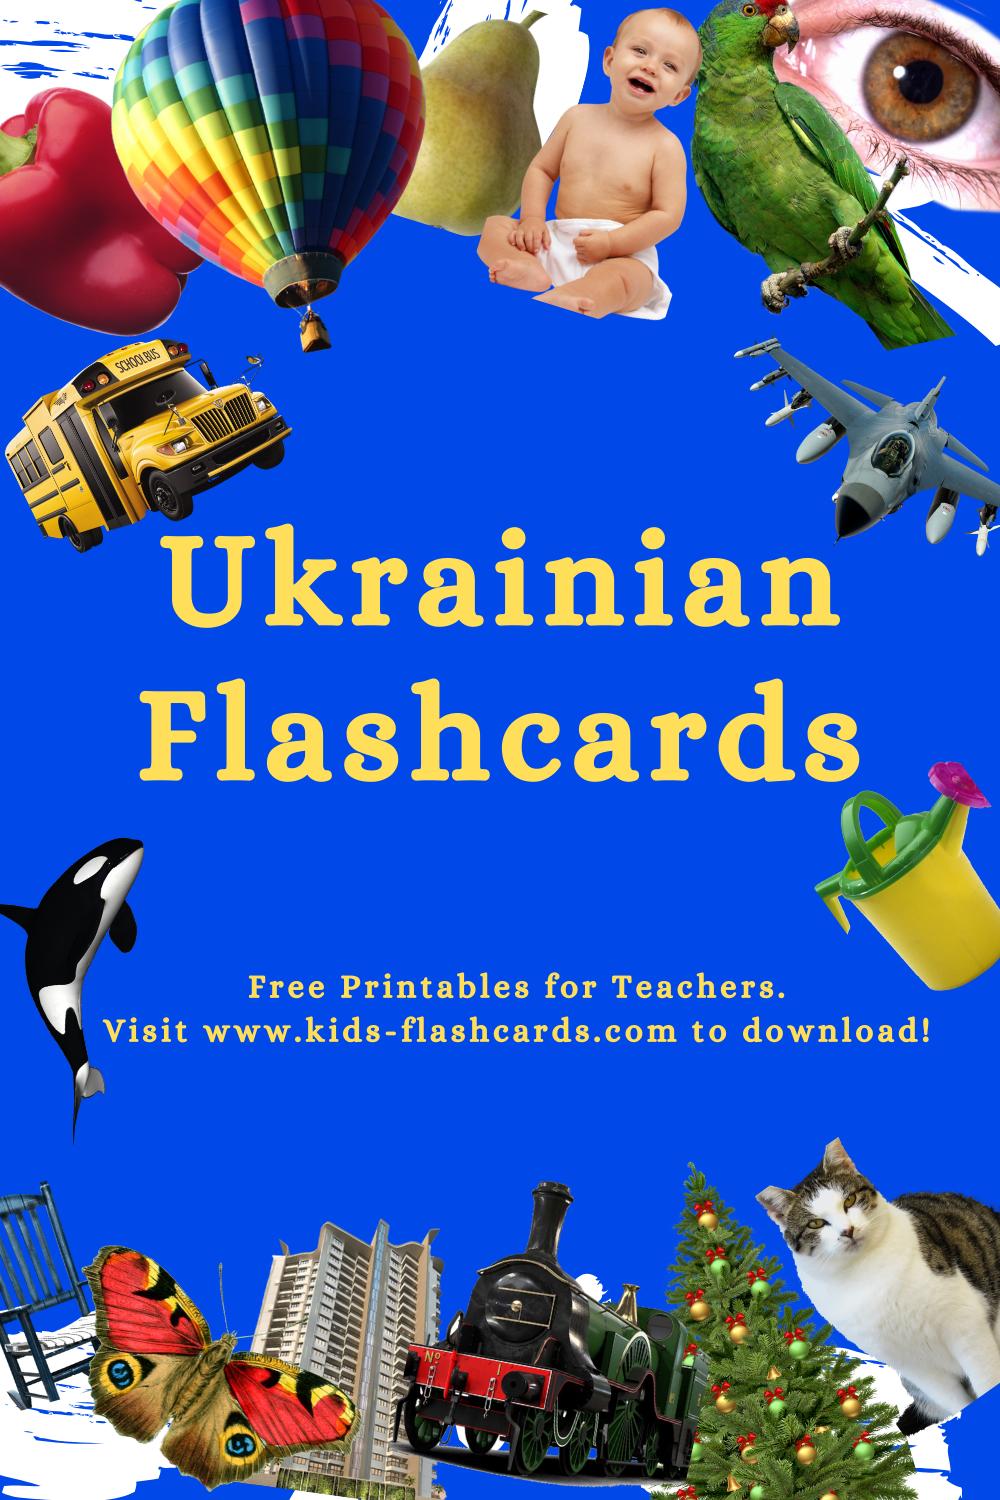 Worksheets to learn Ukrainian language